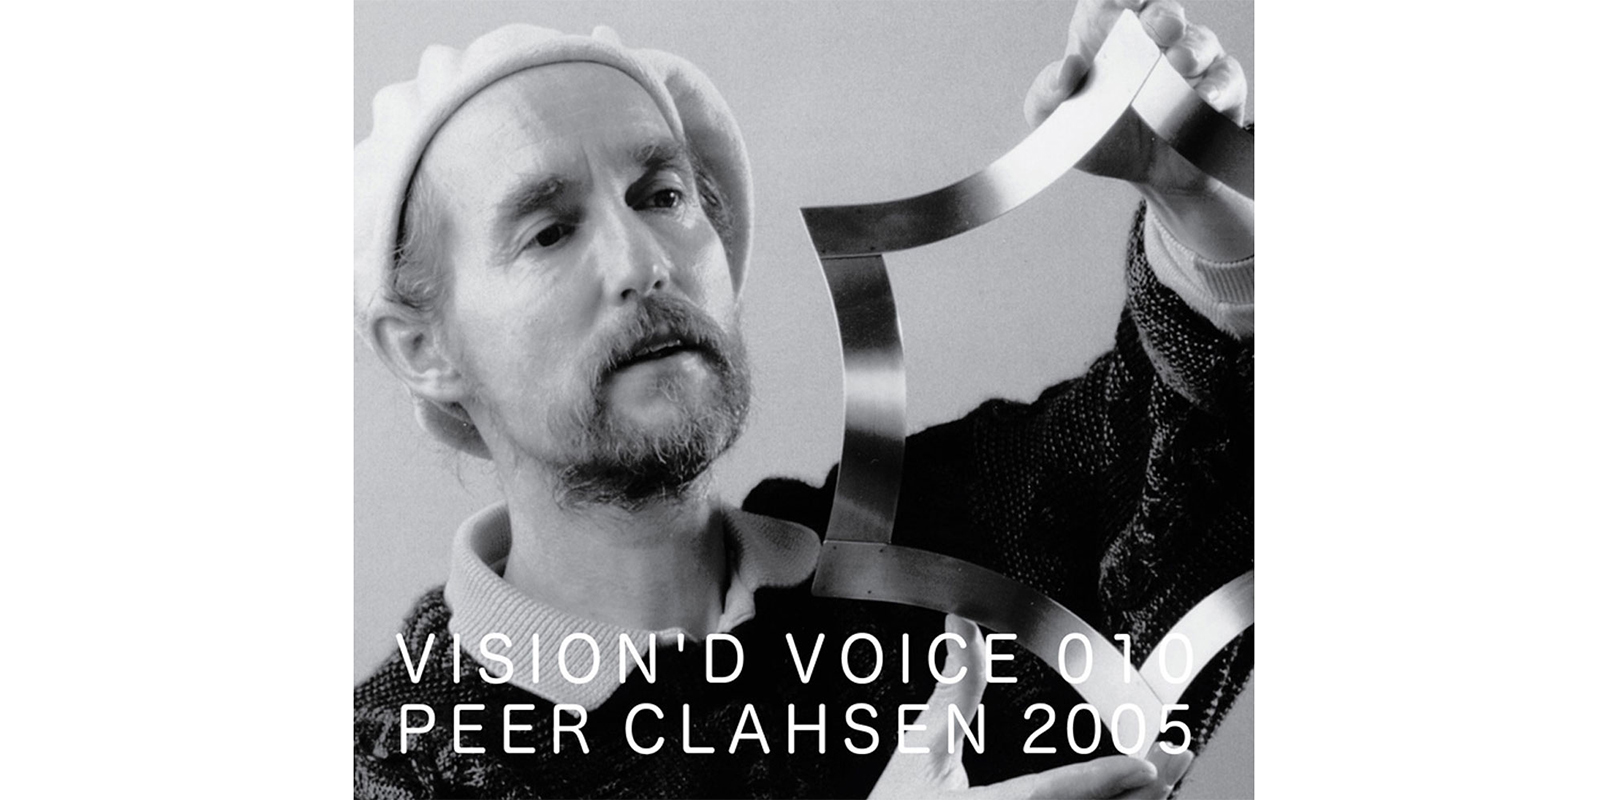 VISION'D VOICE・10・PEER CLAHSEN 2005